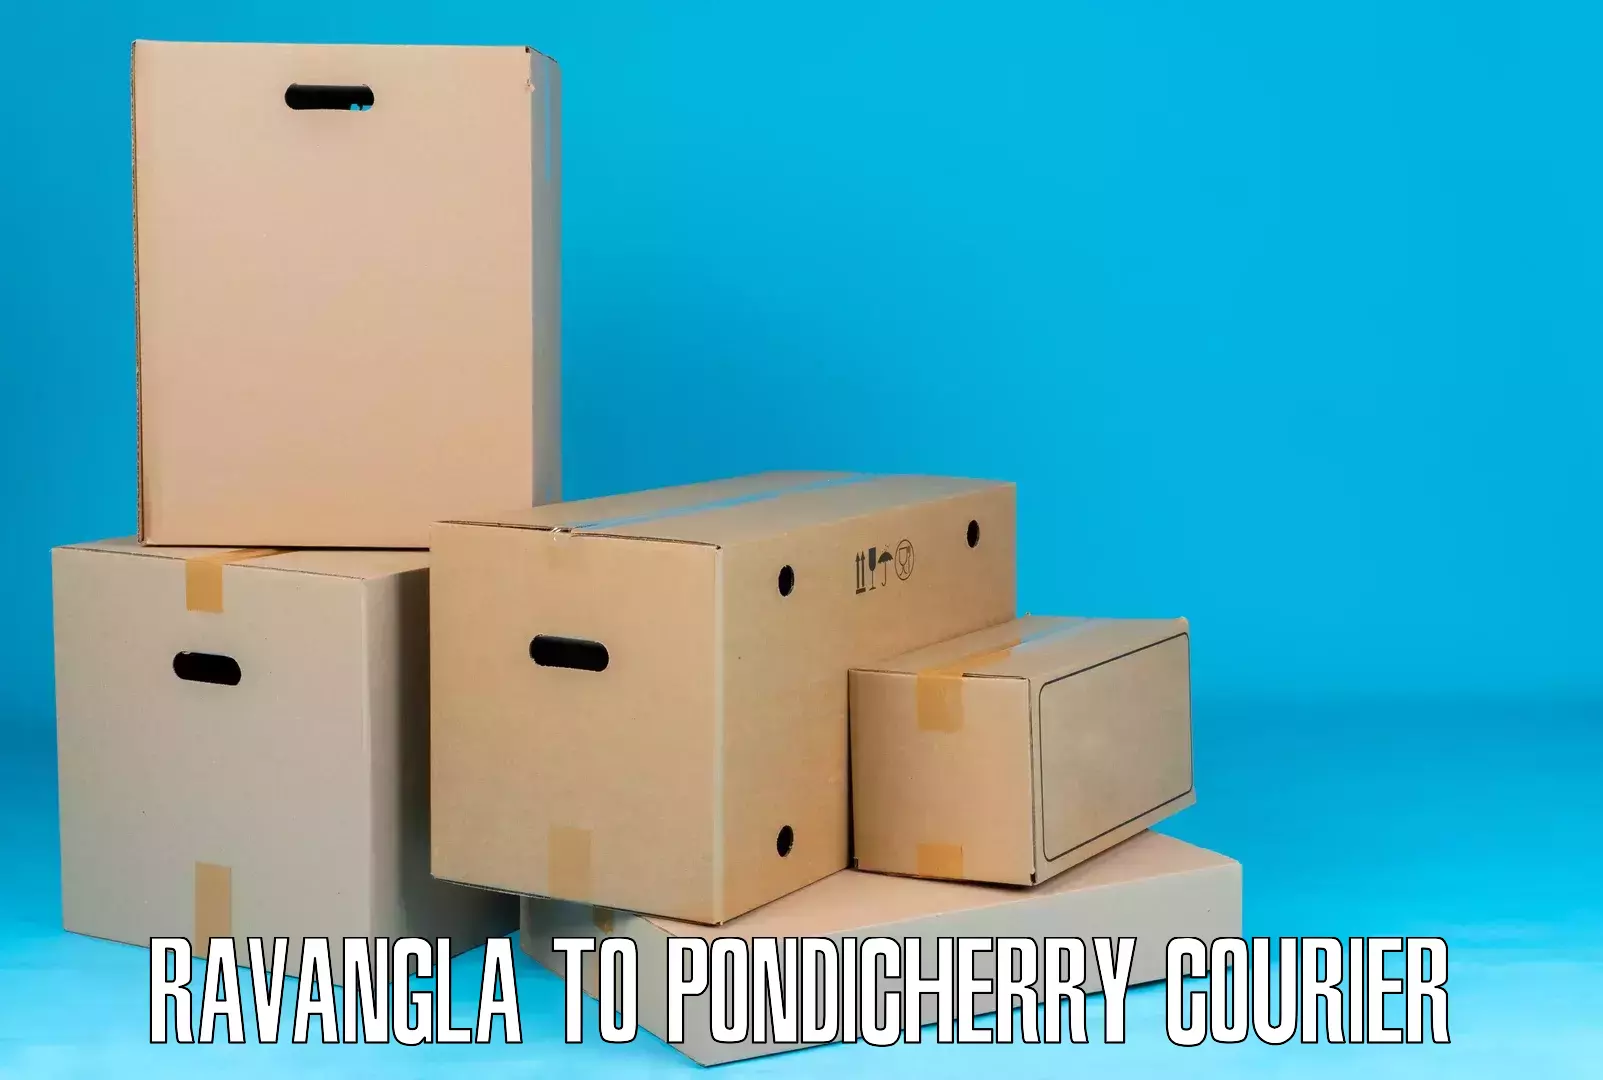 State-of-the-art courier technology Ravangla to Pondicherry University